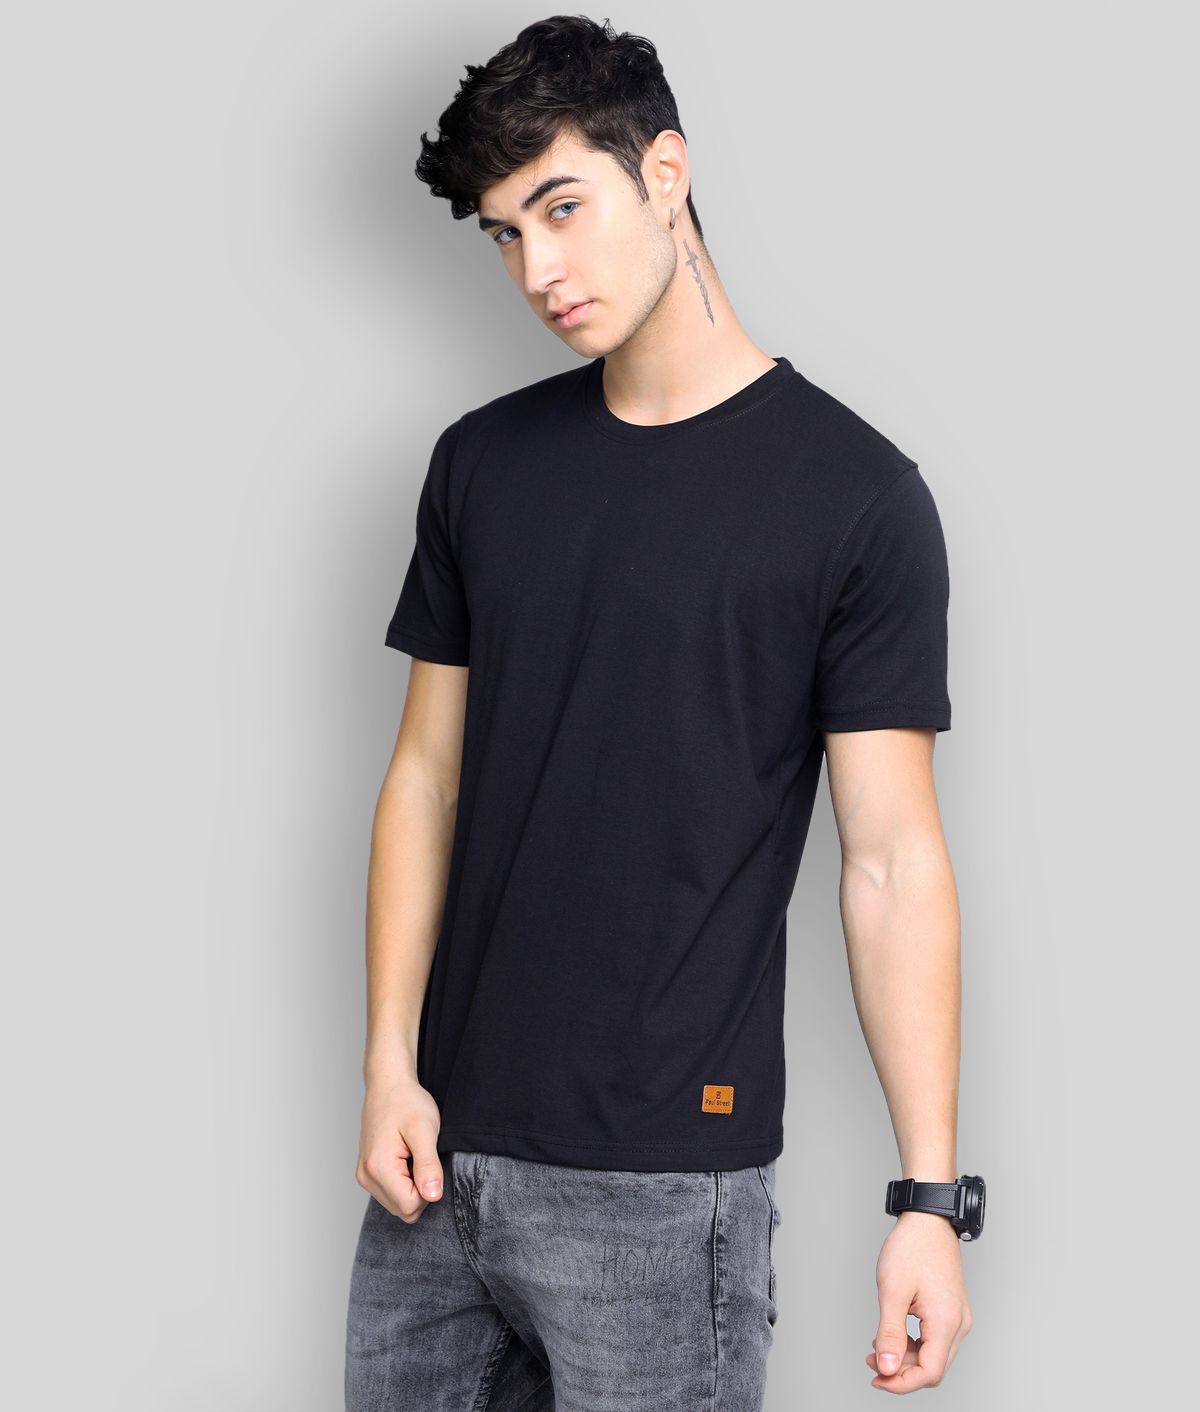     			Paul Street - Black Cotton Blend Slim Fit Men's T-Shirt ( Pack of 1 )